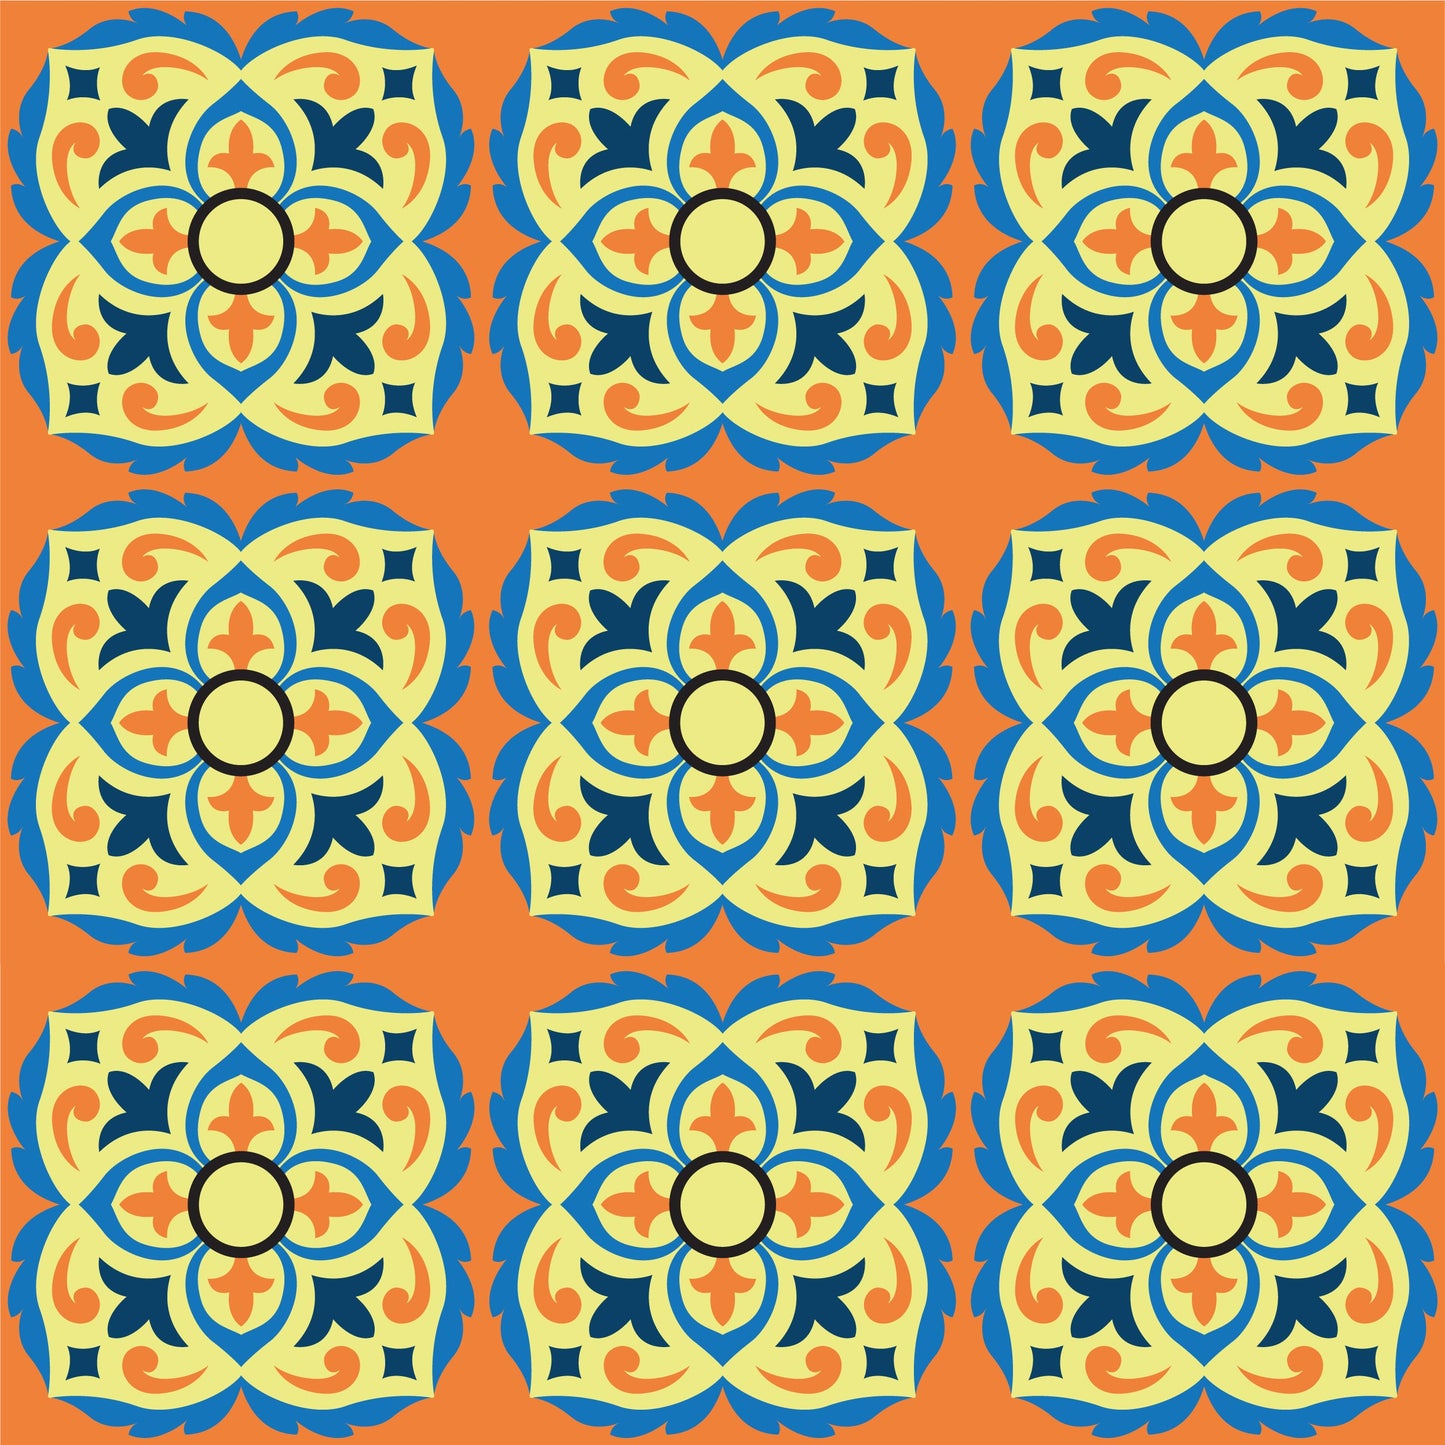 Orange & Yellow Vintage Tile Stickers Pack